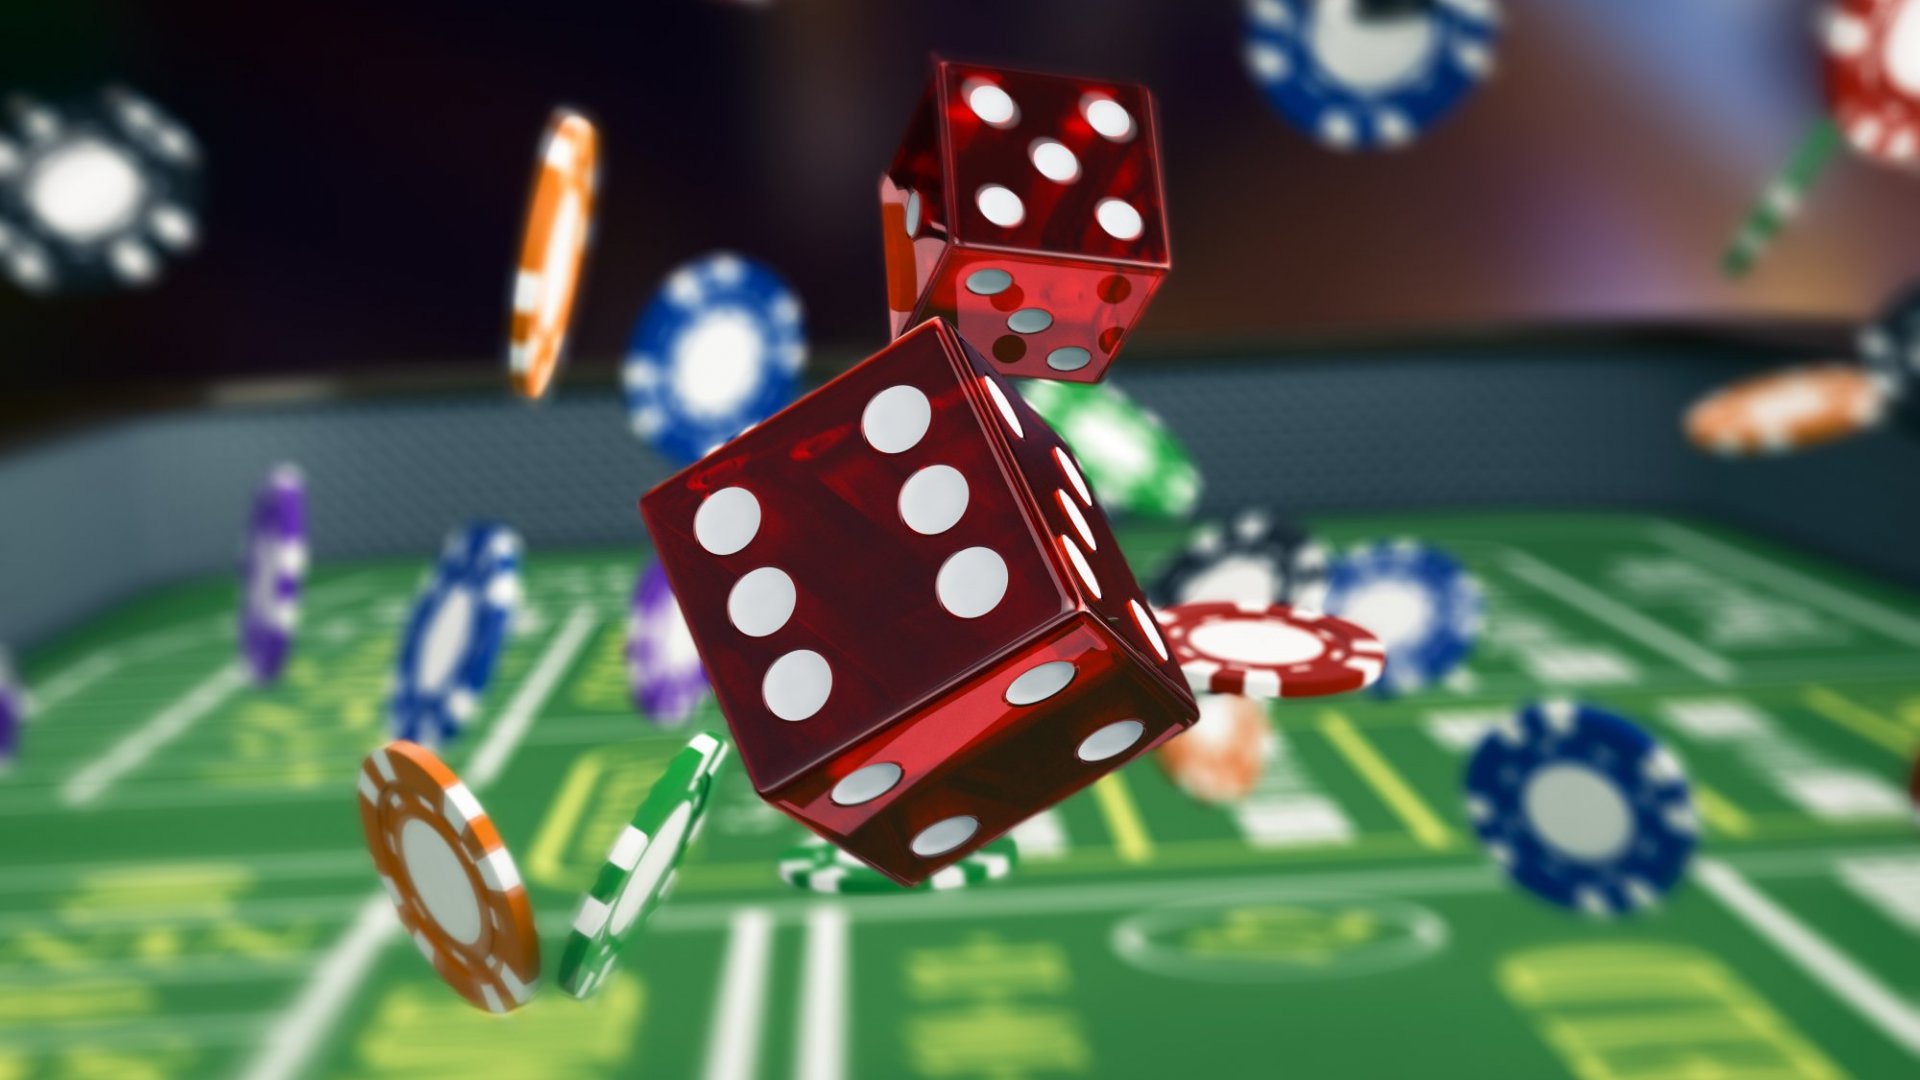 gambling games